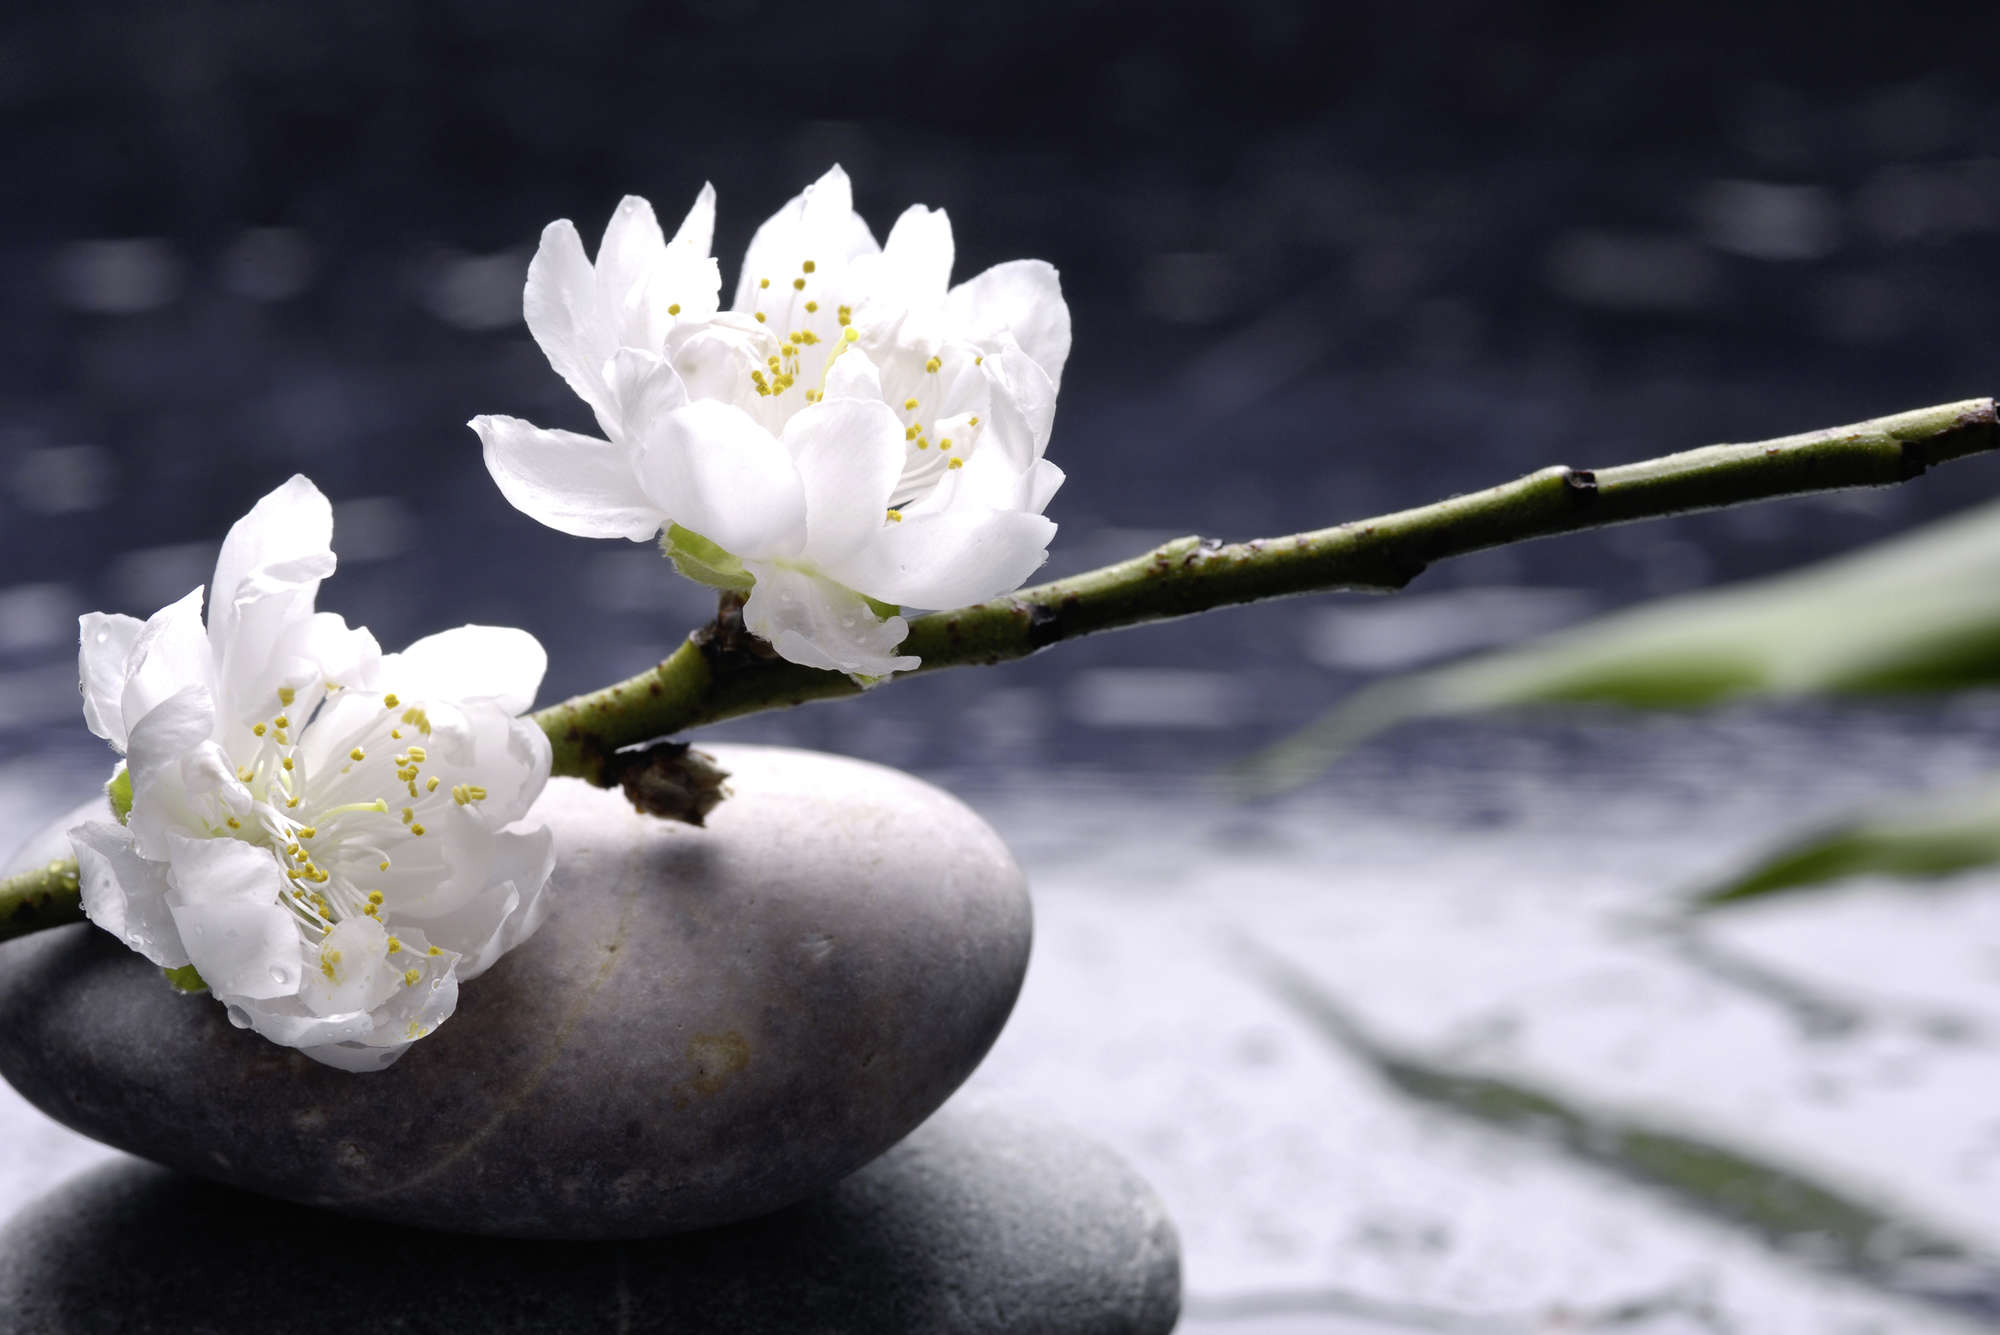             Digital behang Wellness Stones with Blossoms - parelmoer glad vlies
        